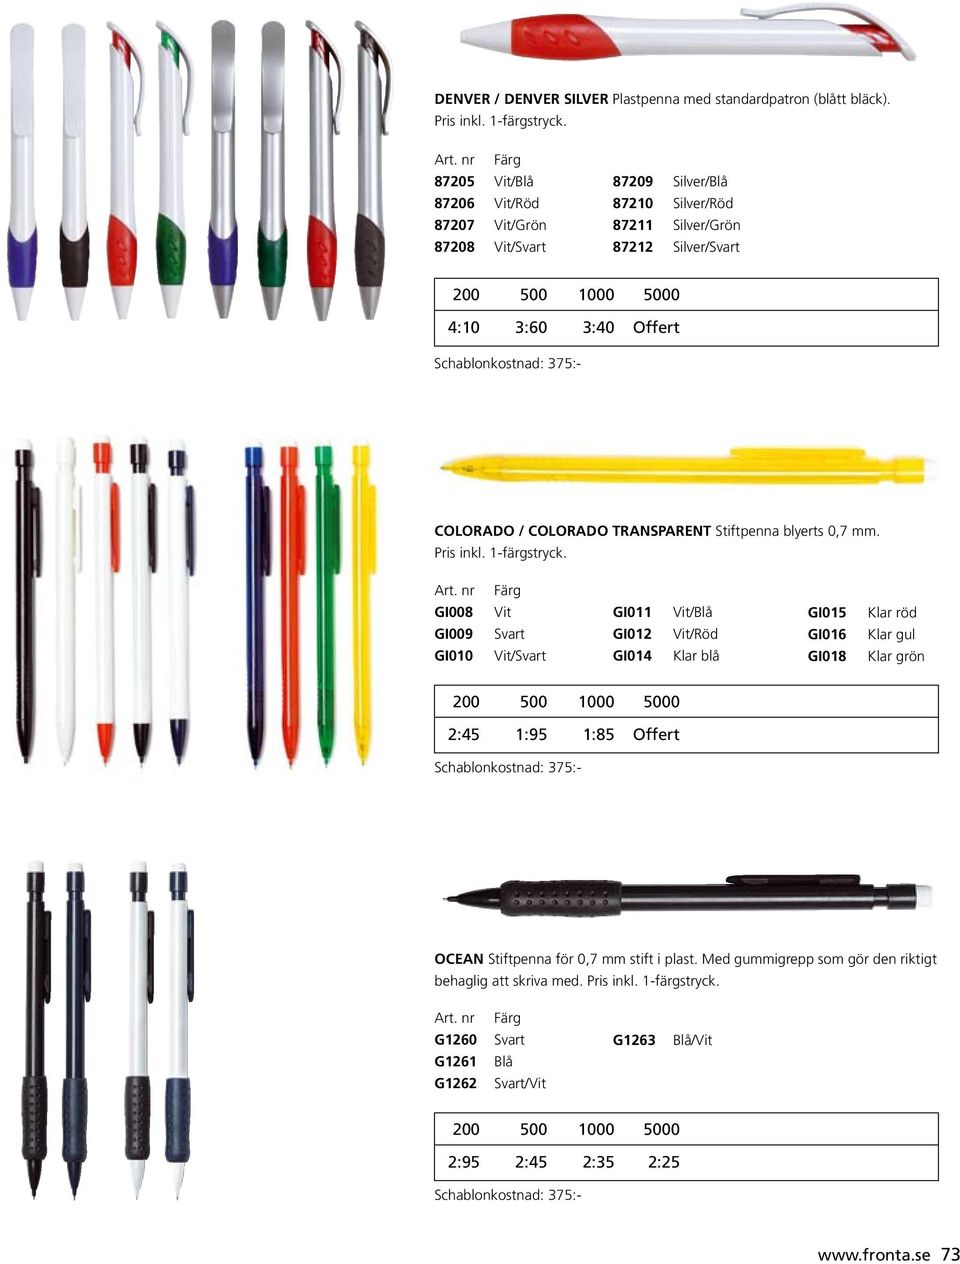 375:- COLORADO / COLORADO TRANSPARENT Stiftpenna blyerts 0,7 mm. Pris inkl. 1-färgstryck. Art.